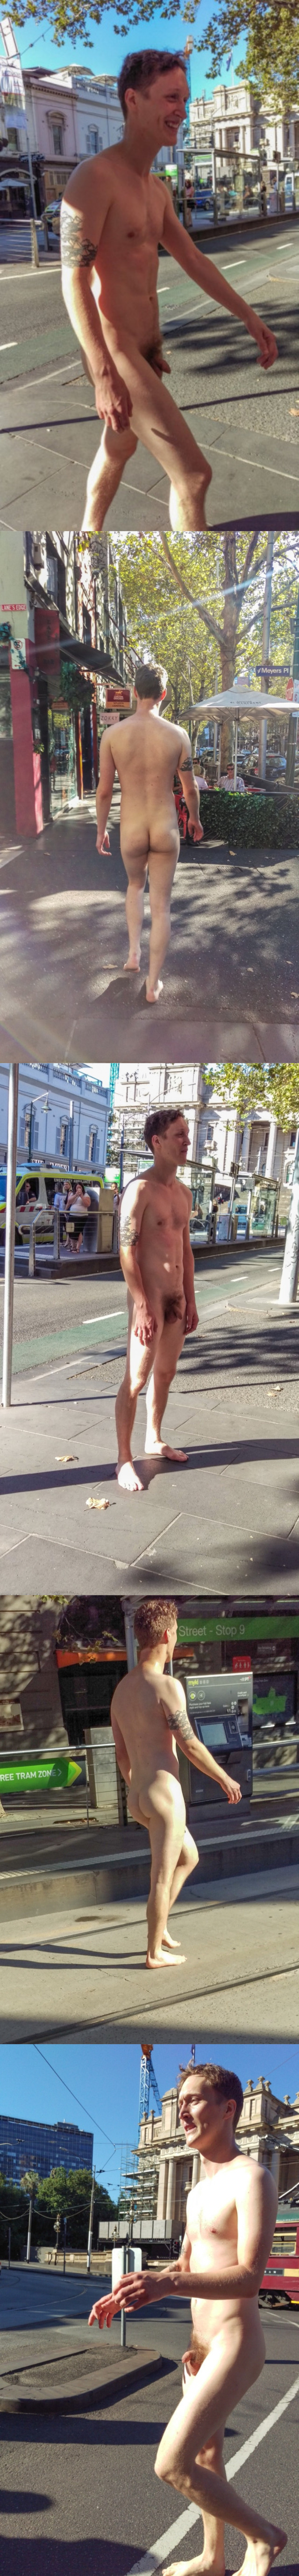 male public nudity